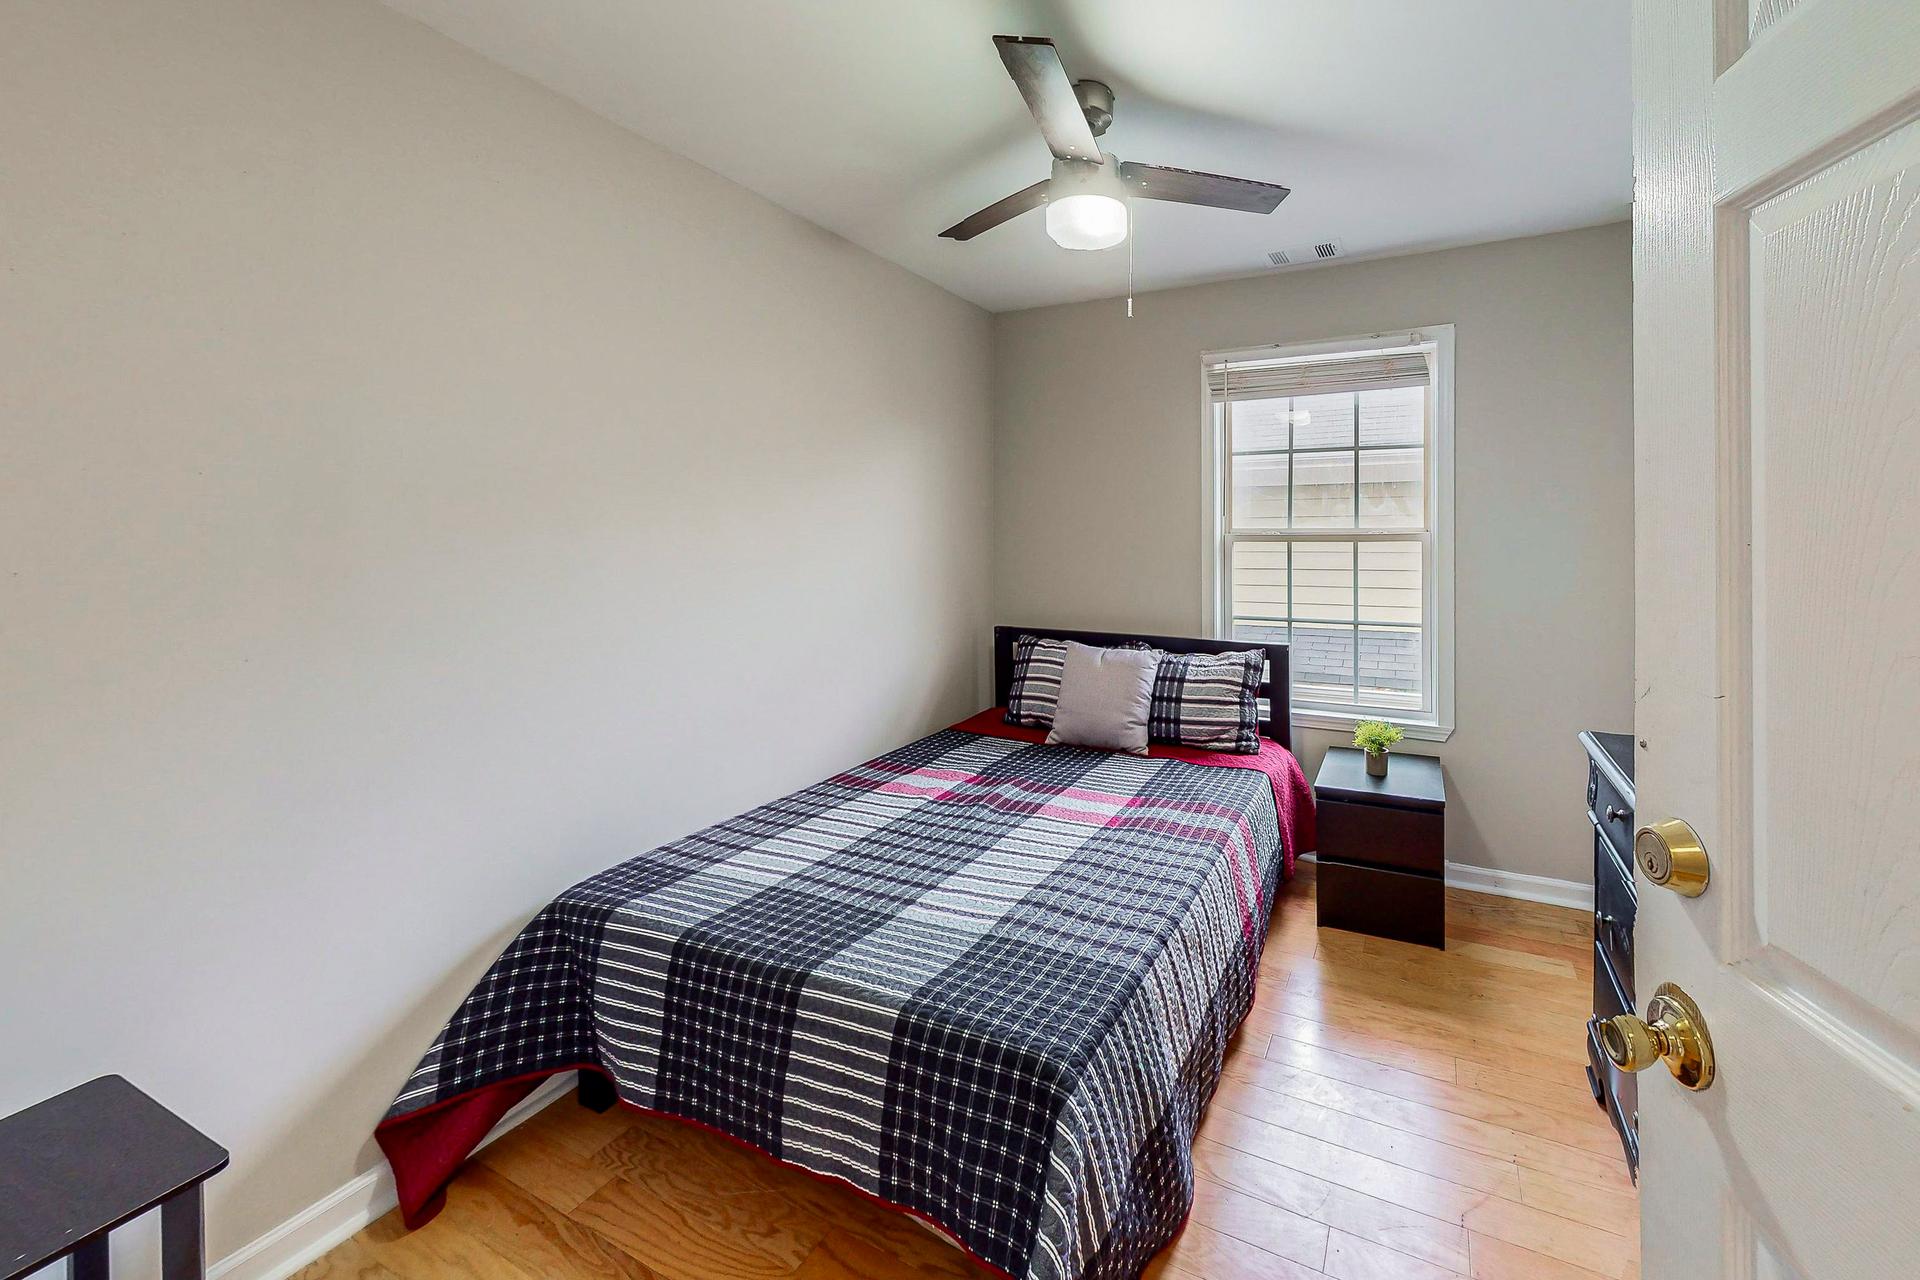 bedroom, detected:ceiling fan, bed, window blind